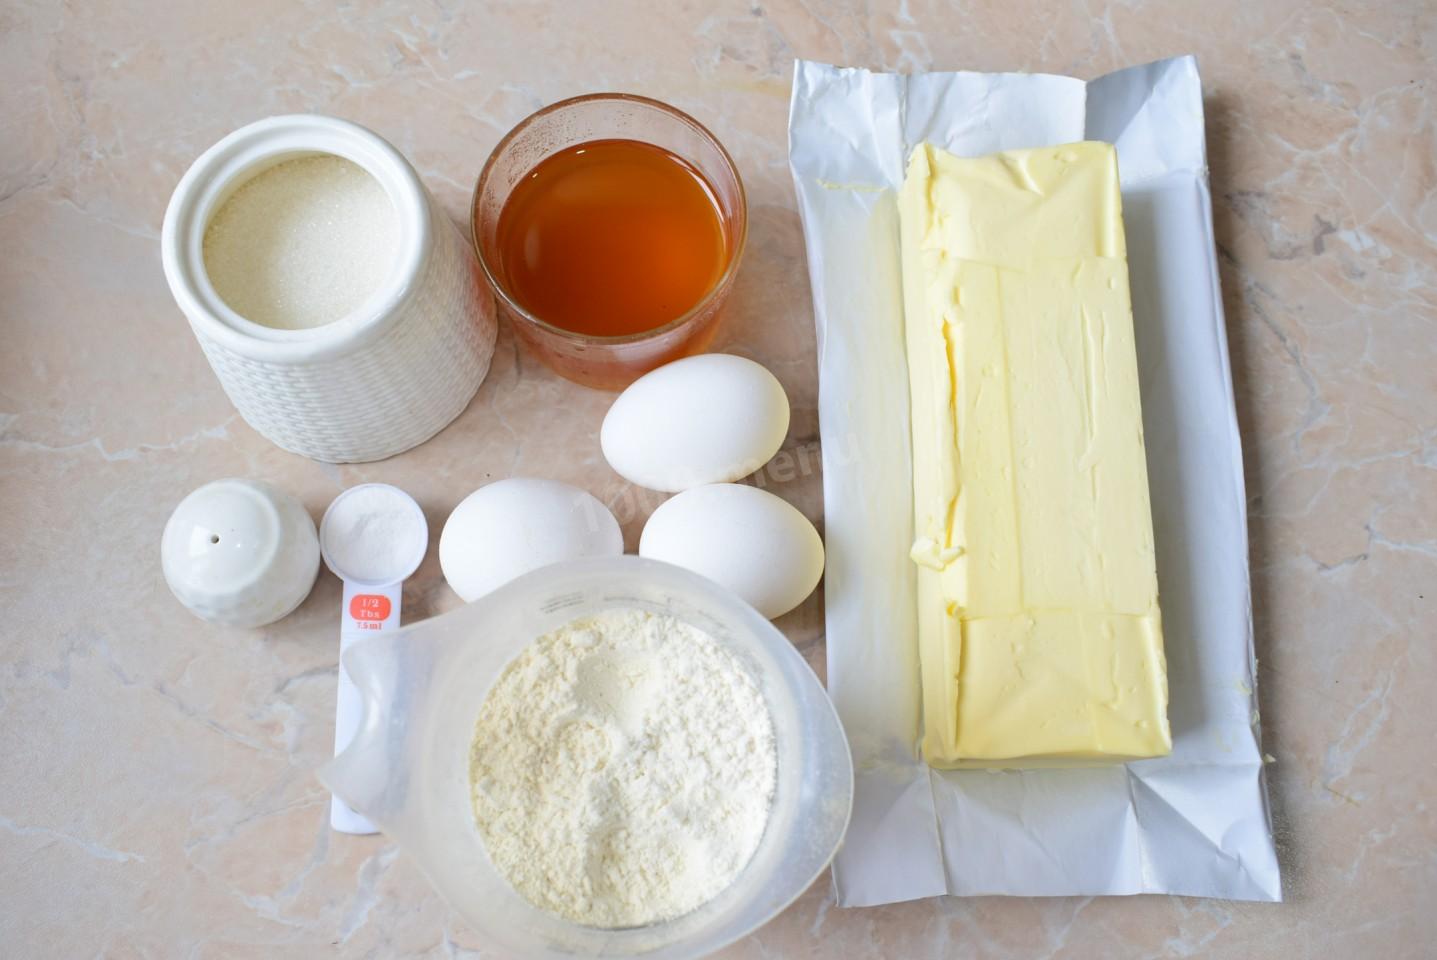 Сахар мука масло без яиц. Медовое масло сливочное. Мука сода яйца и сахар. Сливочное масло с медом. Мед масло яйца.